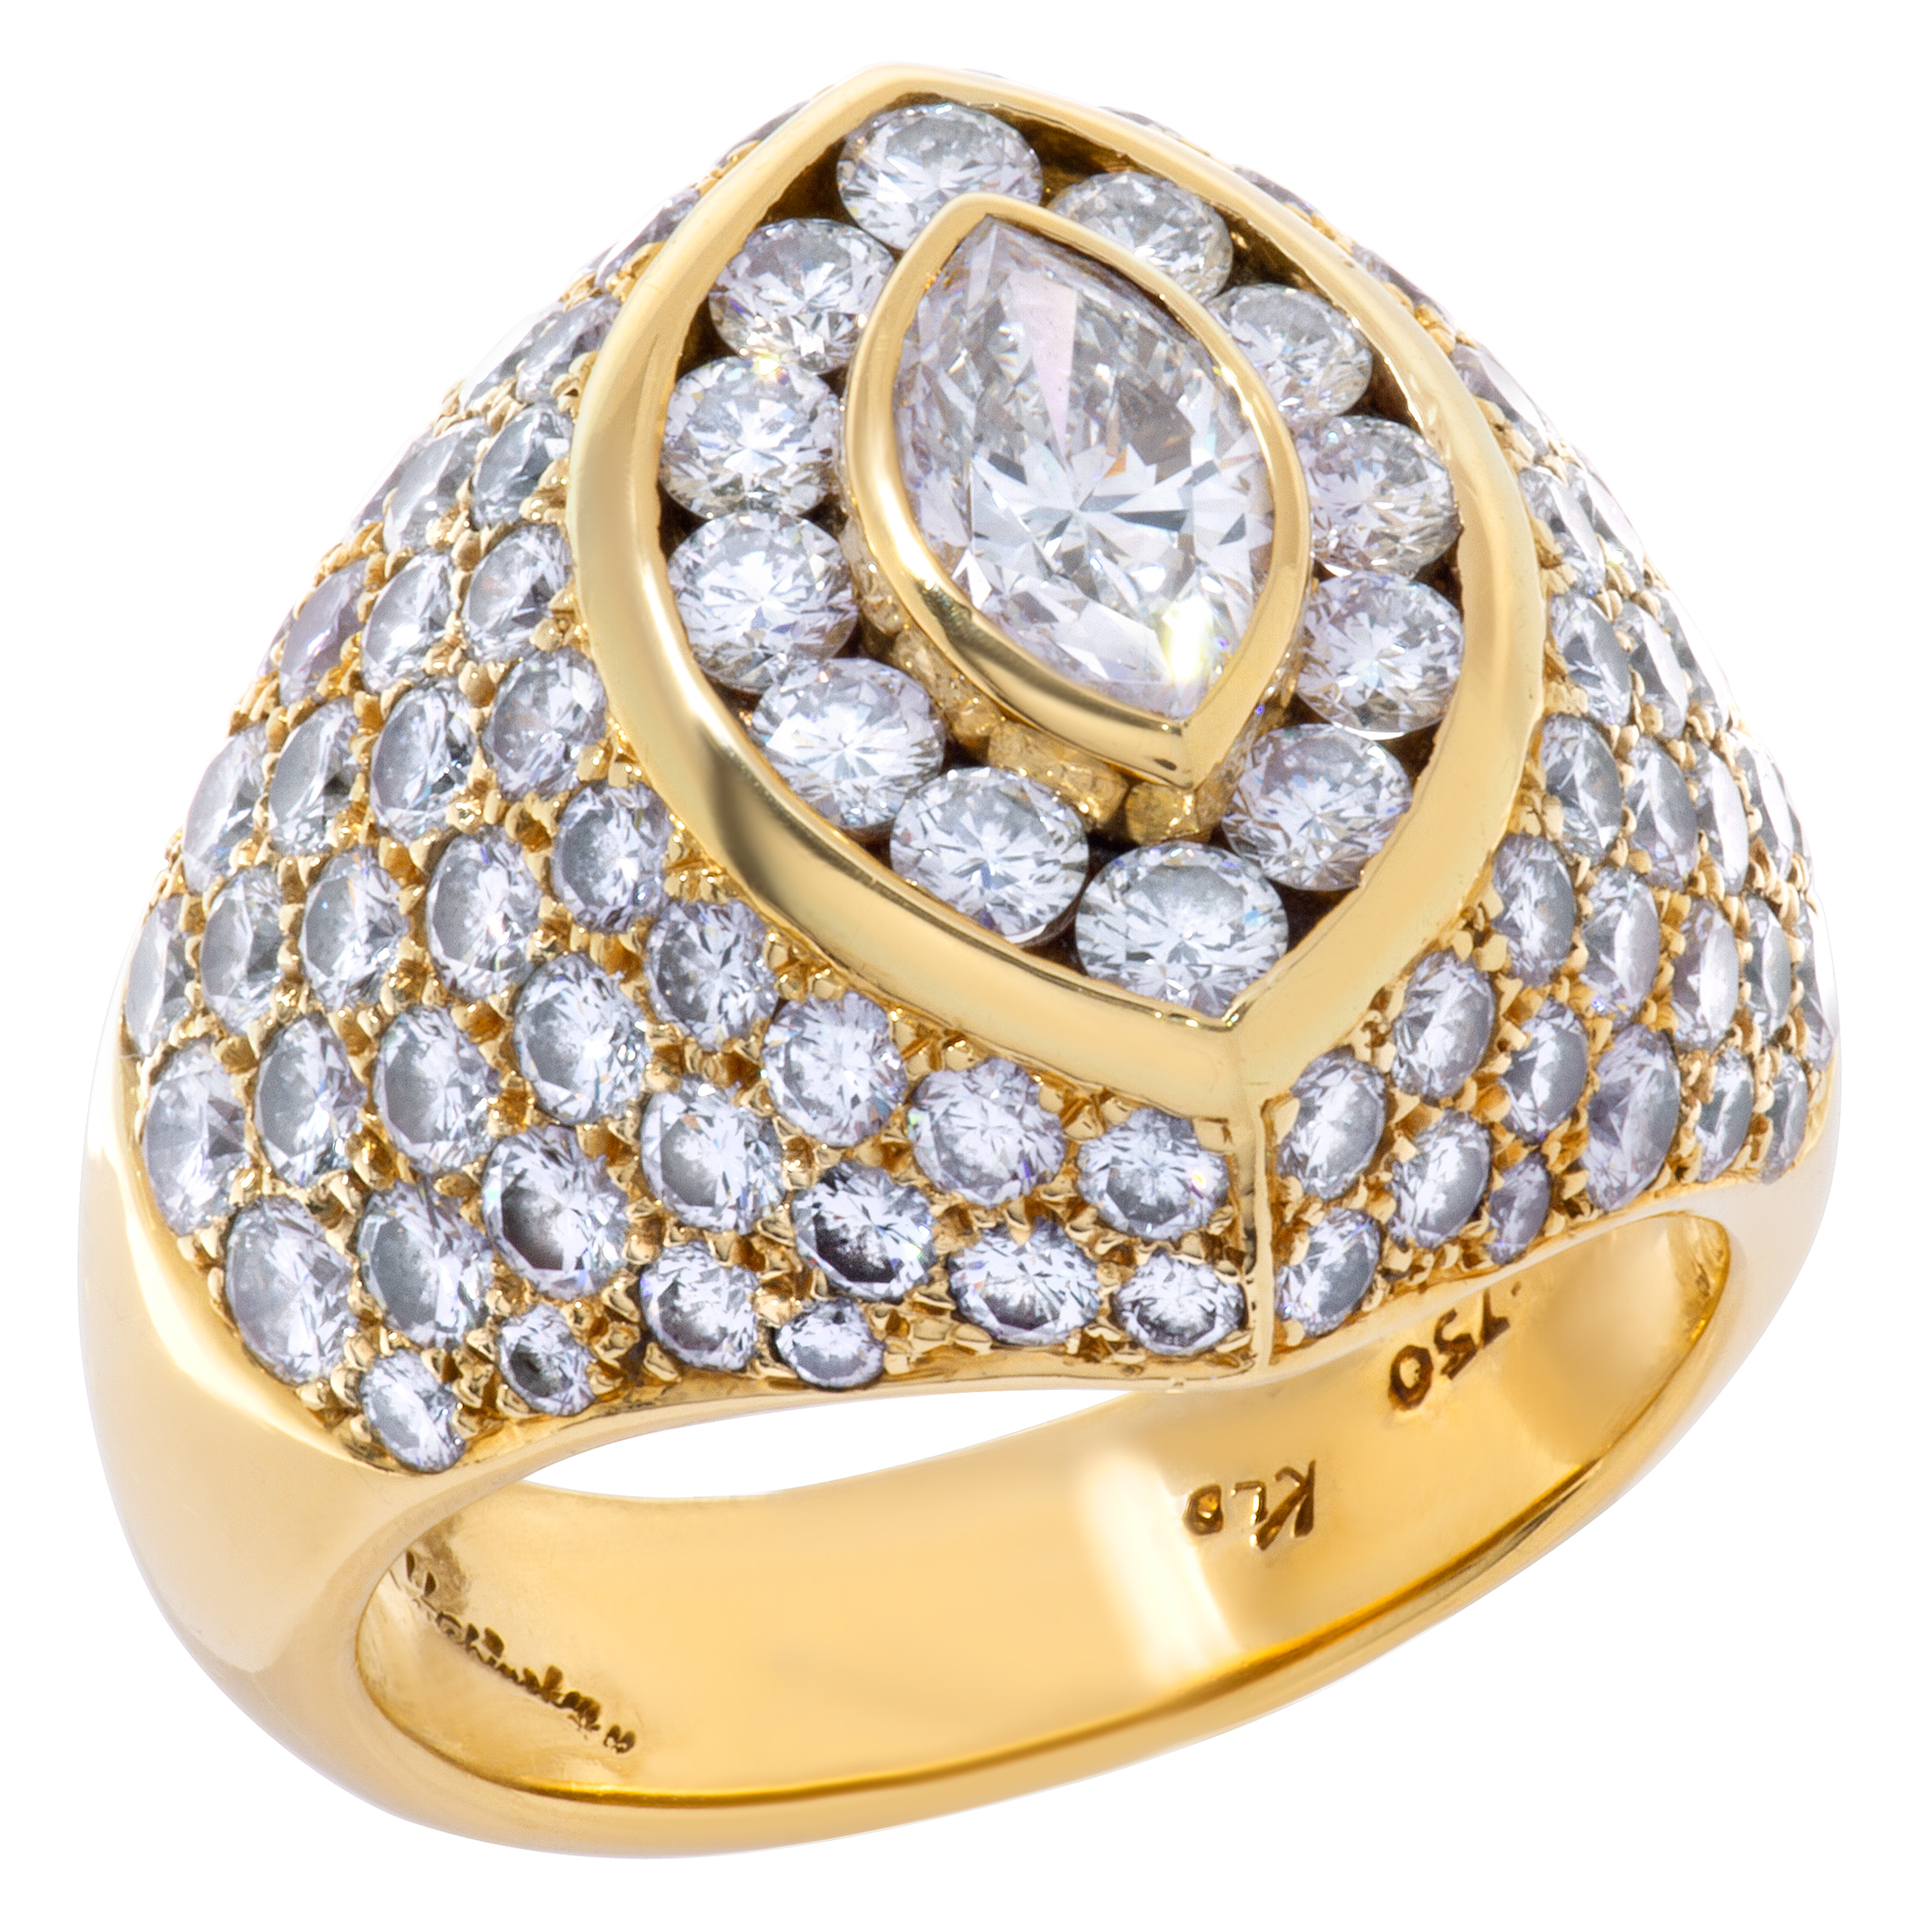 Kutchinsky 18K yellow gold diamond ring, total diamonds weight approx. 4.00 carats. All diamonds estimate E-F color, VVS clarity. image 3